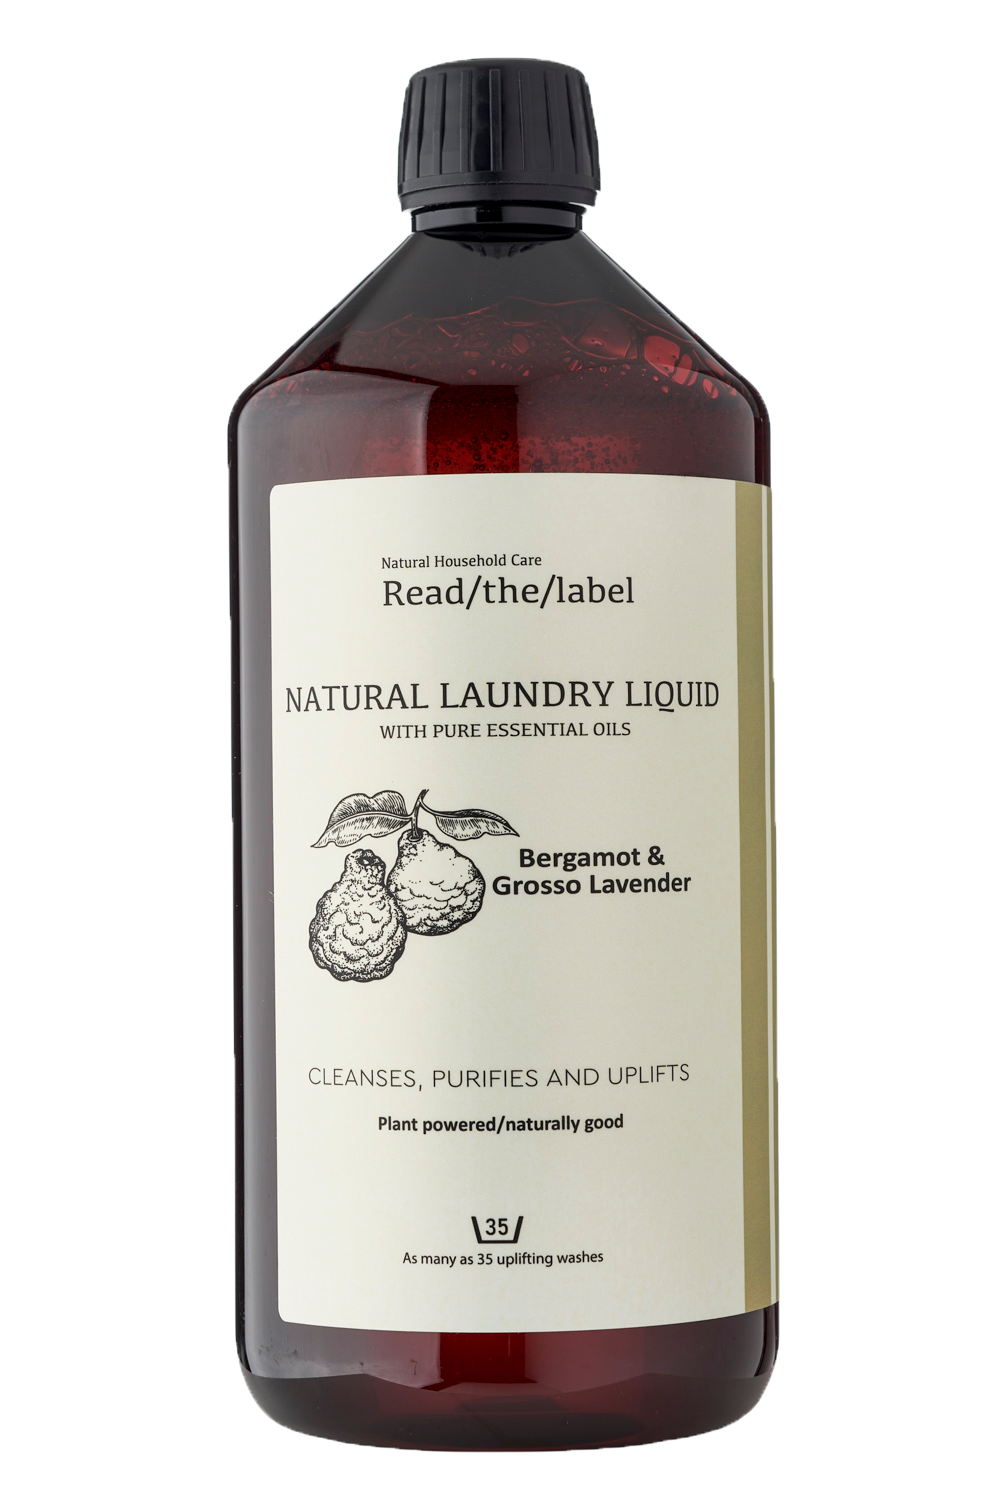 Natural laundry liquid